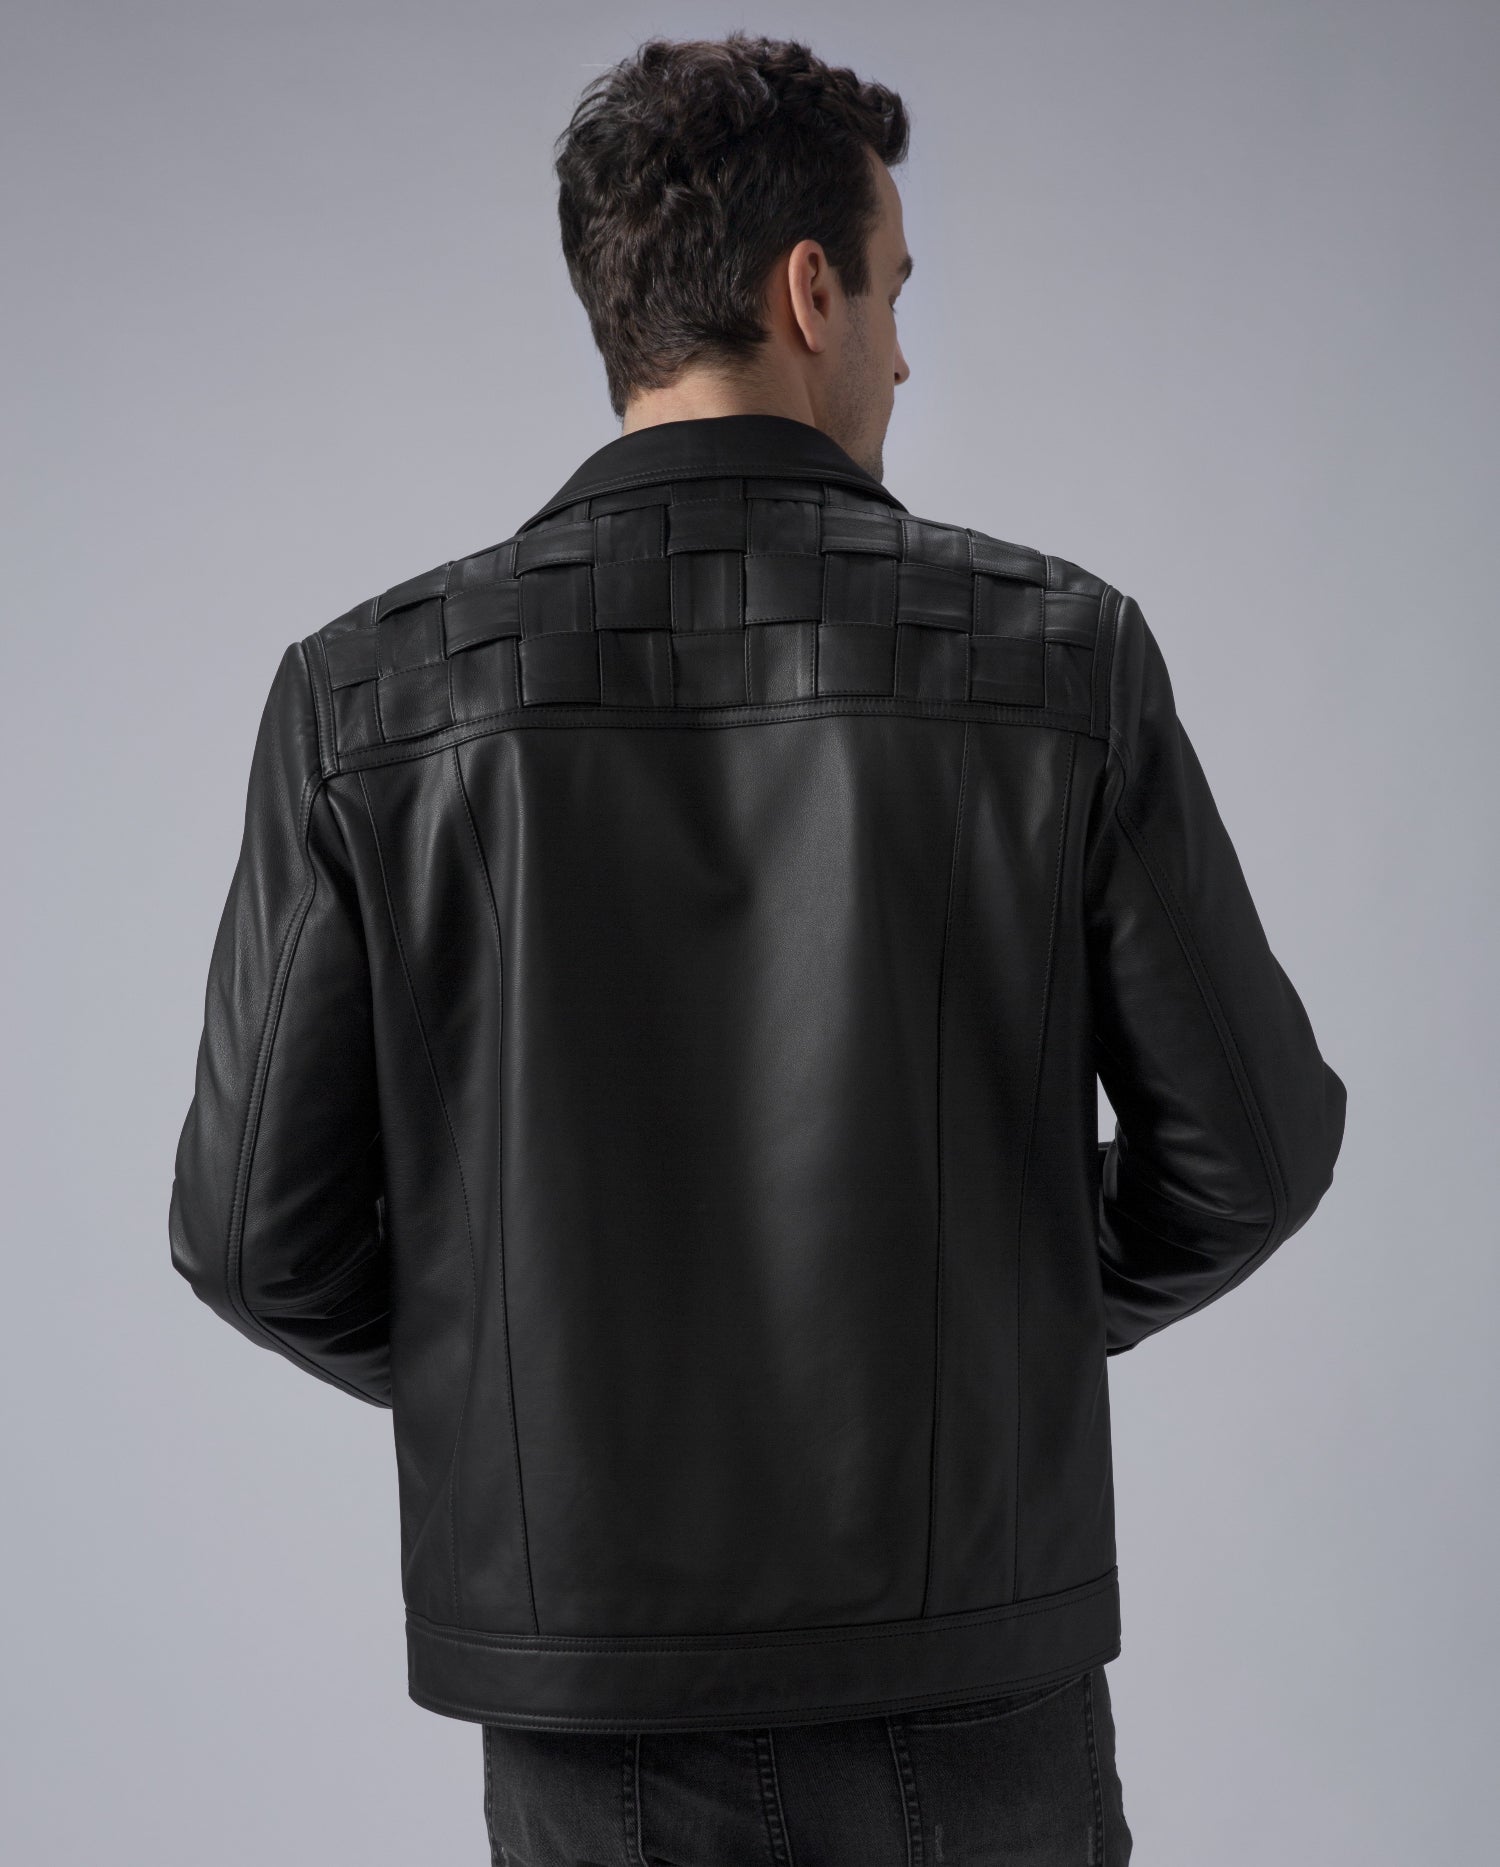 PalaLeather Men's Leather Trucker Jacket